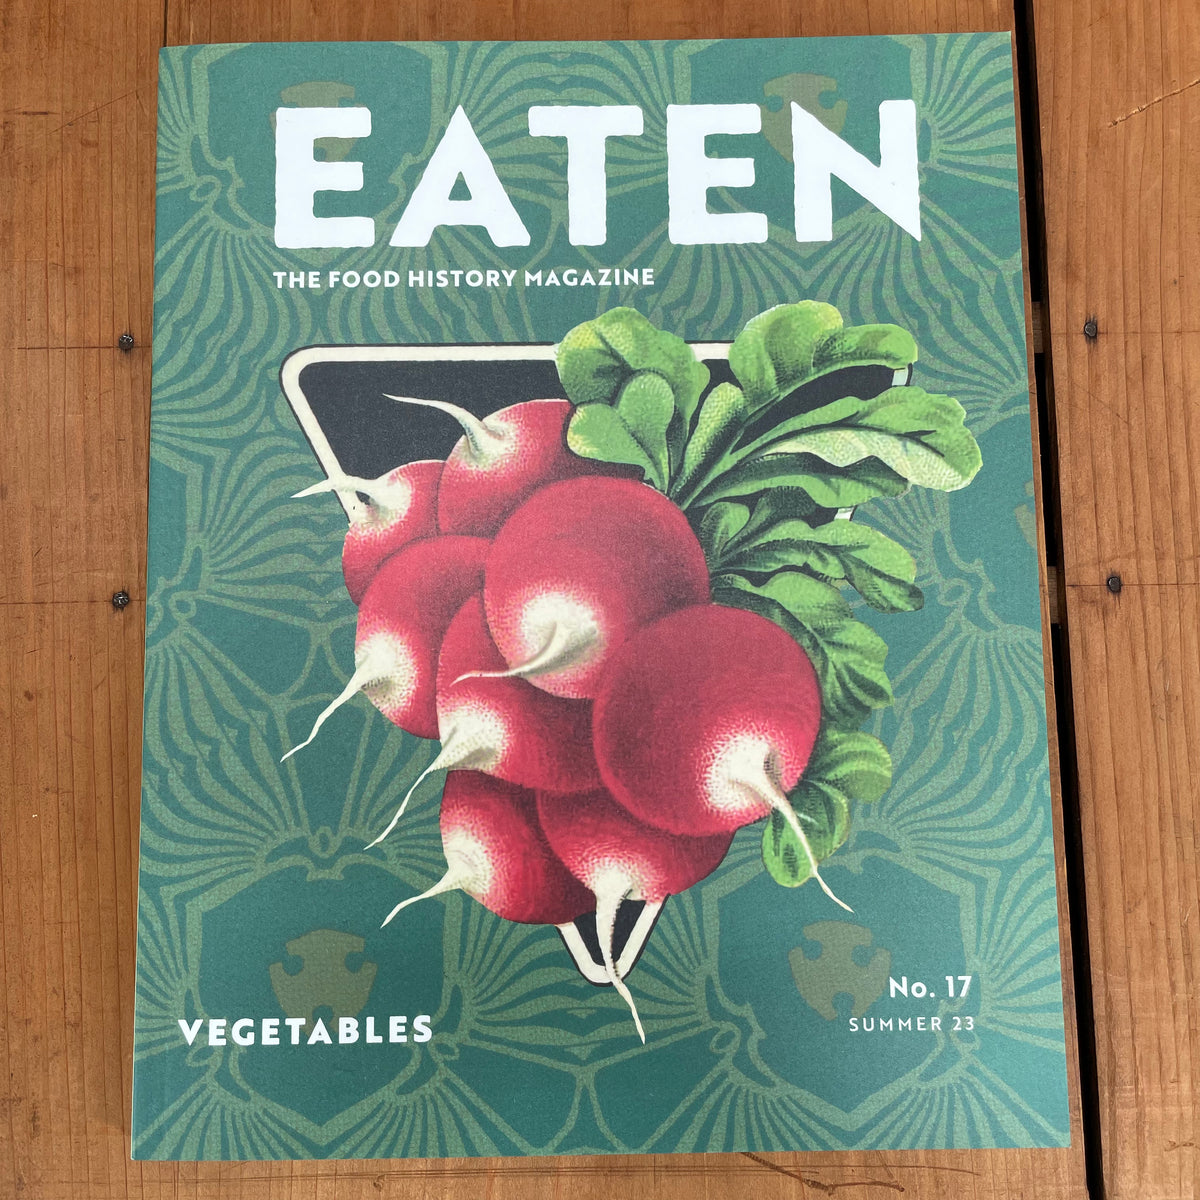 Eaten Magazine No. 17 - Vegetables